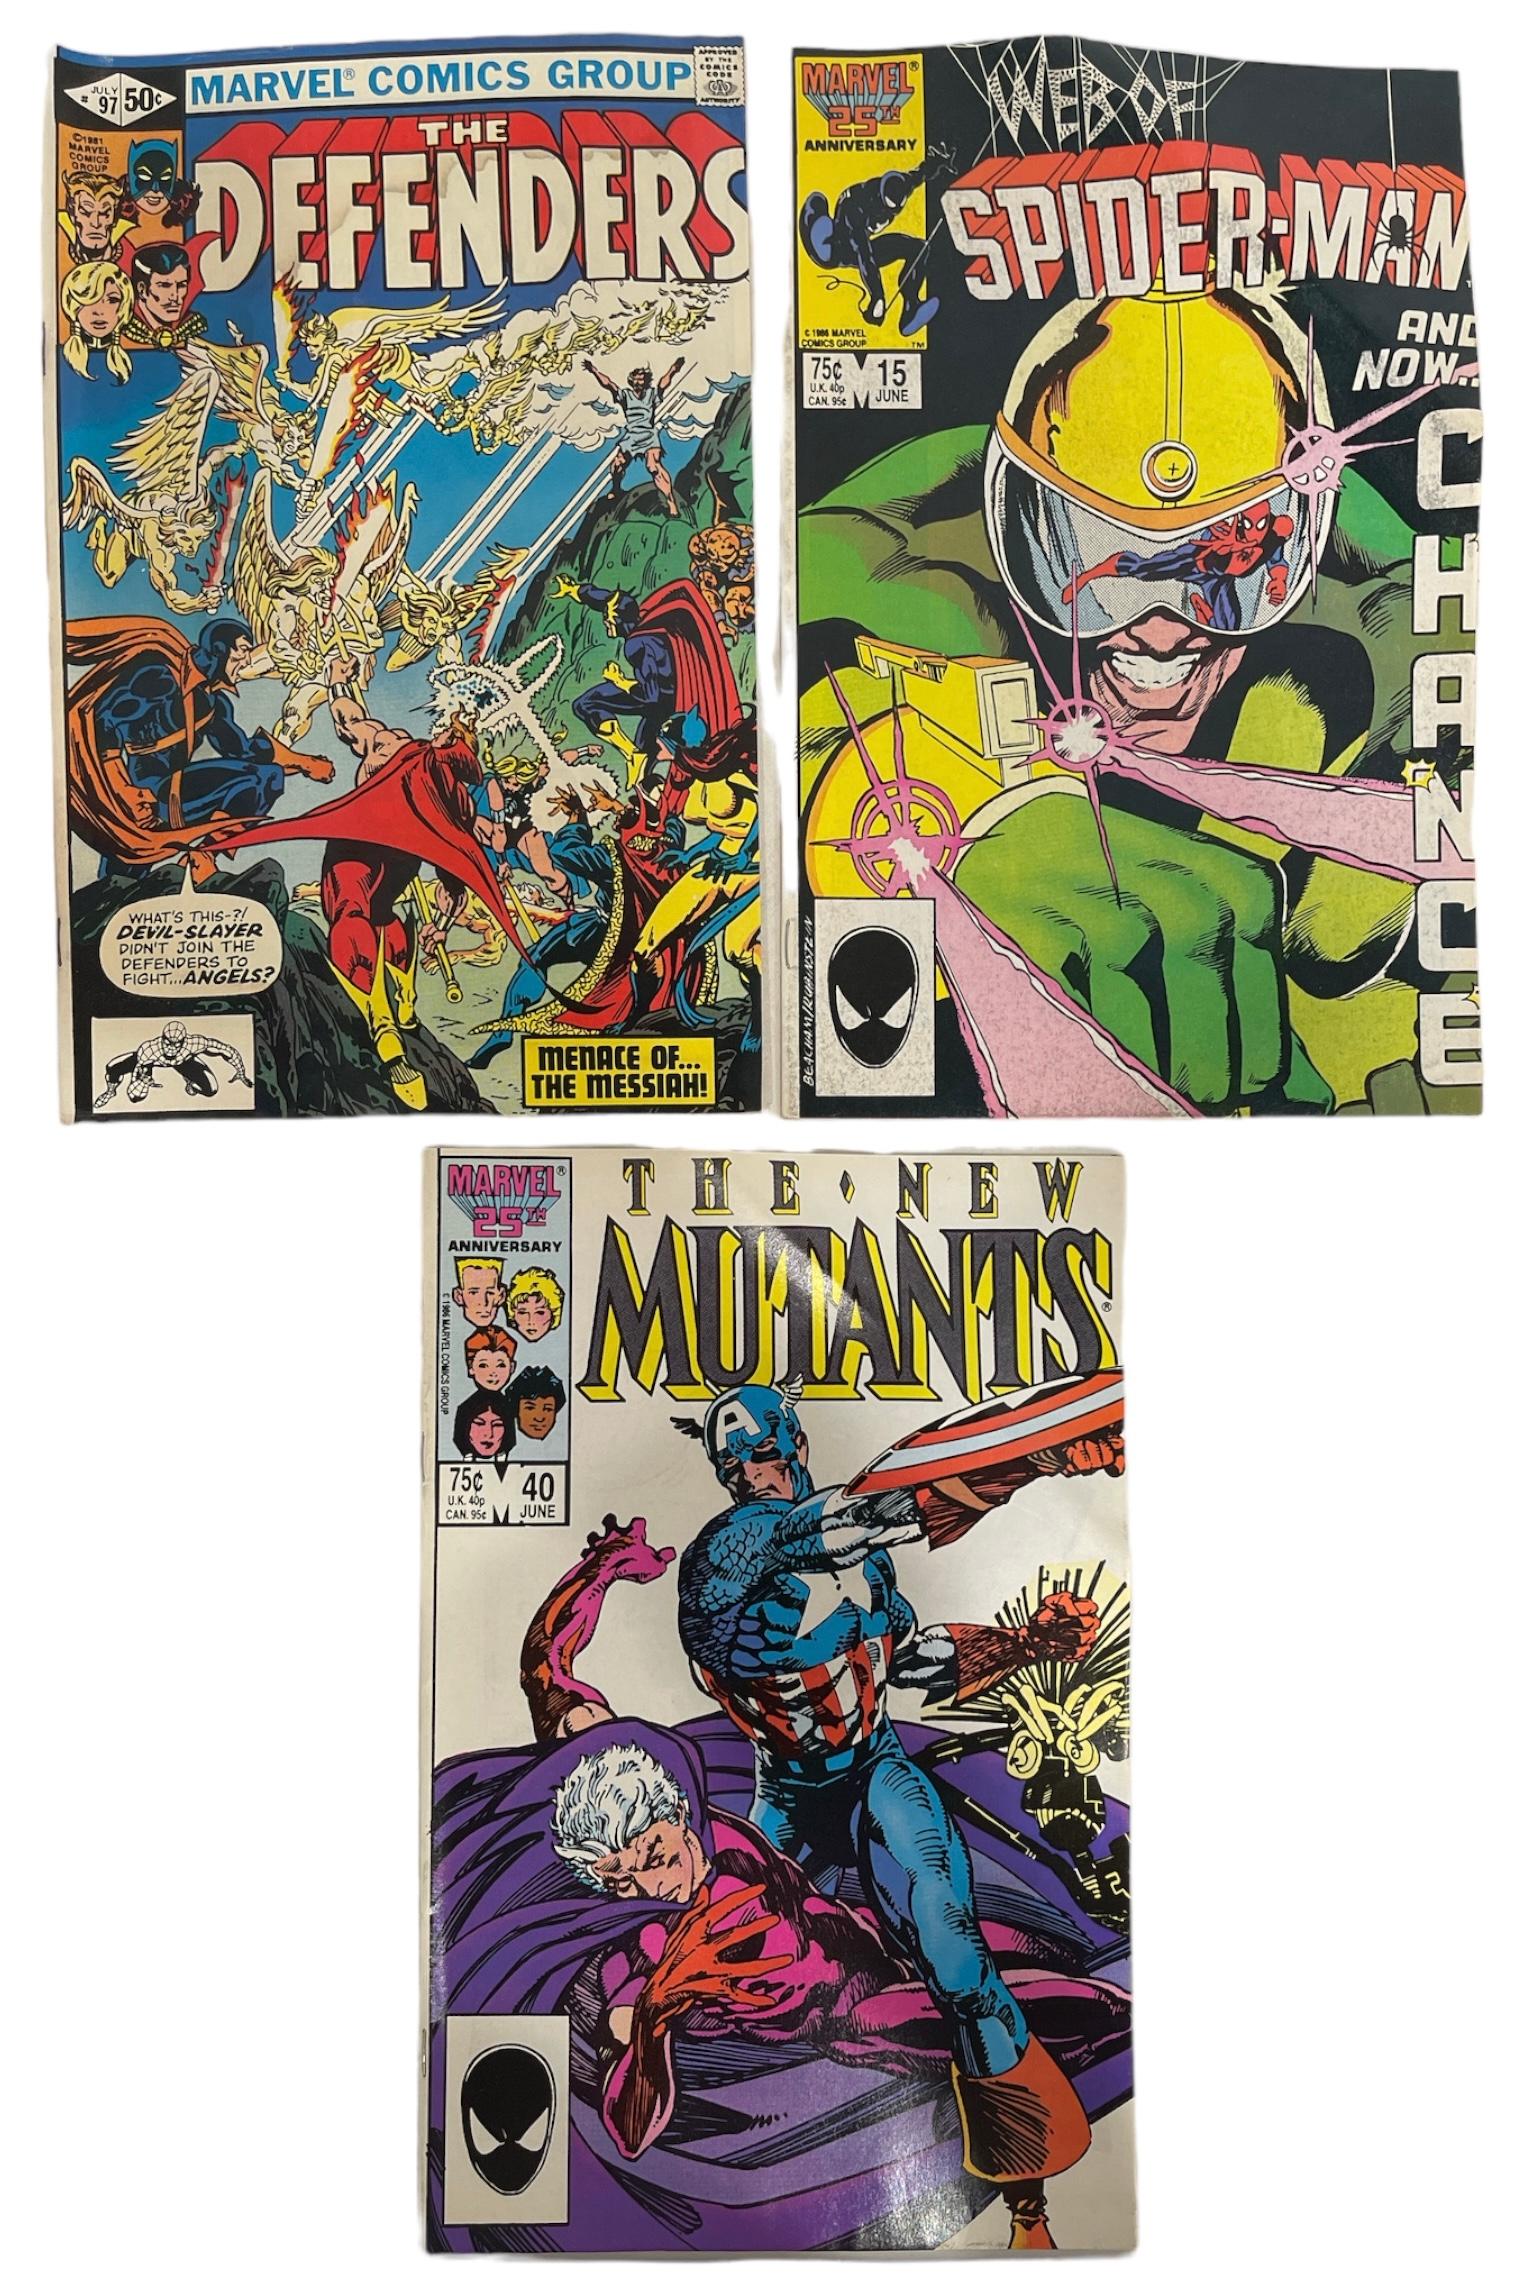 Vintage Marvel Comics - Comic Book Collection